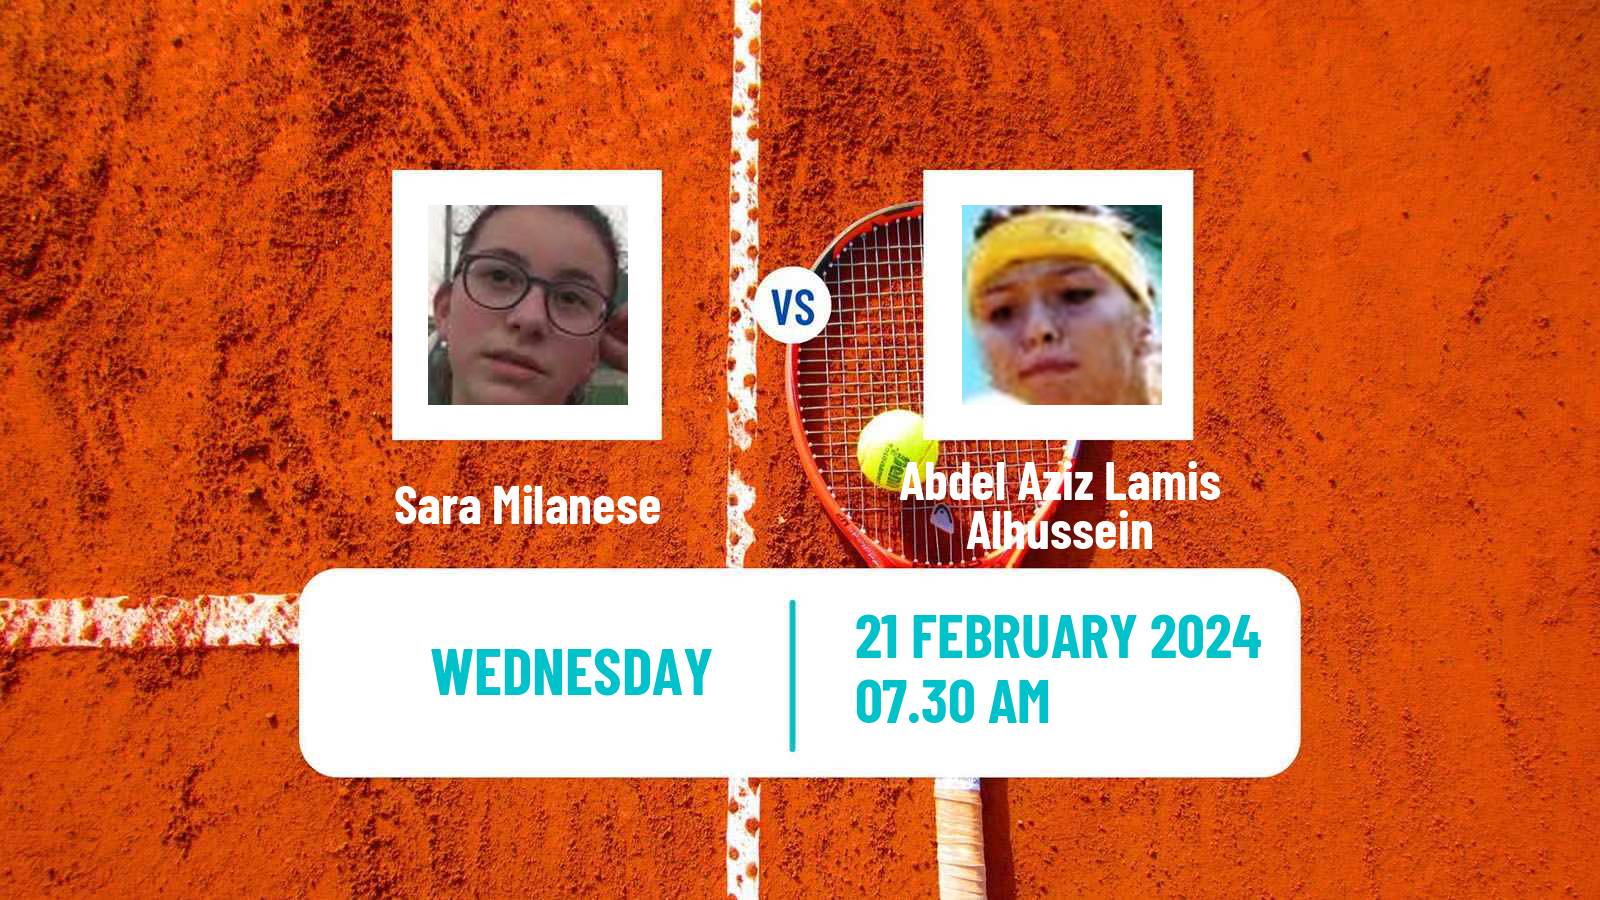 Tennis ITF W15 Sharm Elsheikh 22 Women Sara Milanese - Abdel Aziz Lamis Alhussein